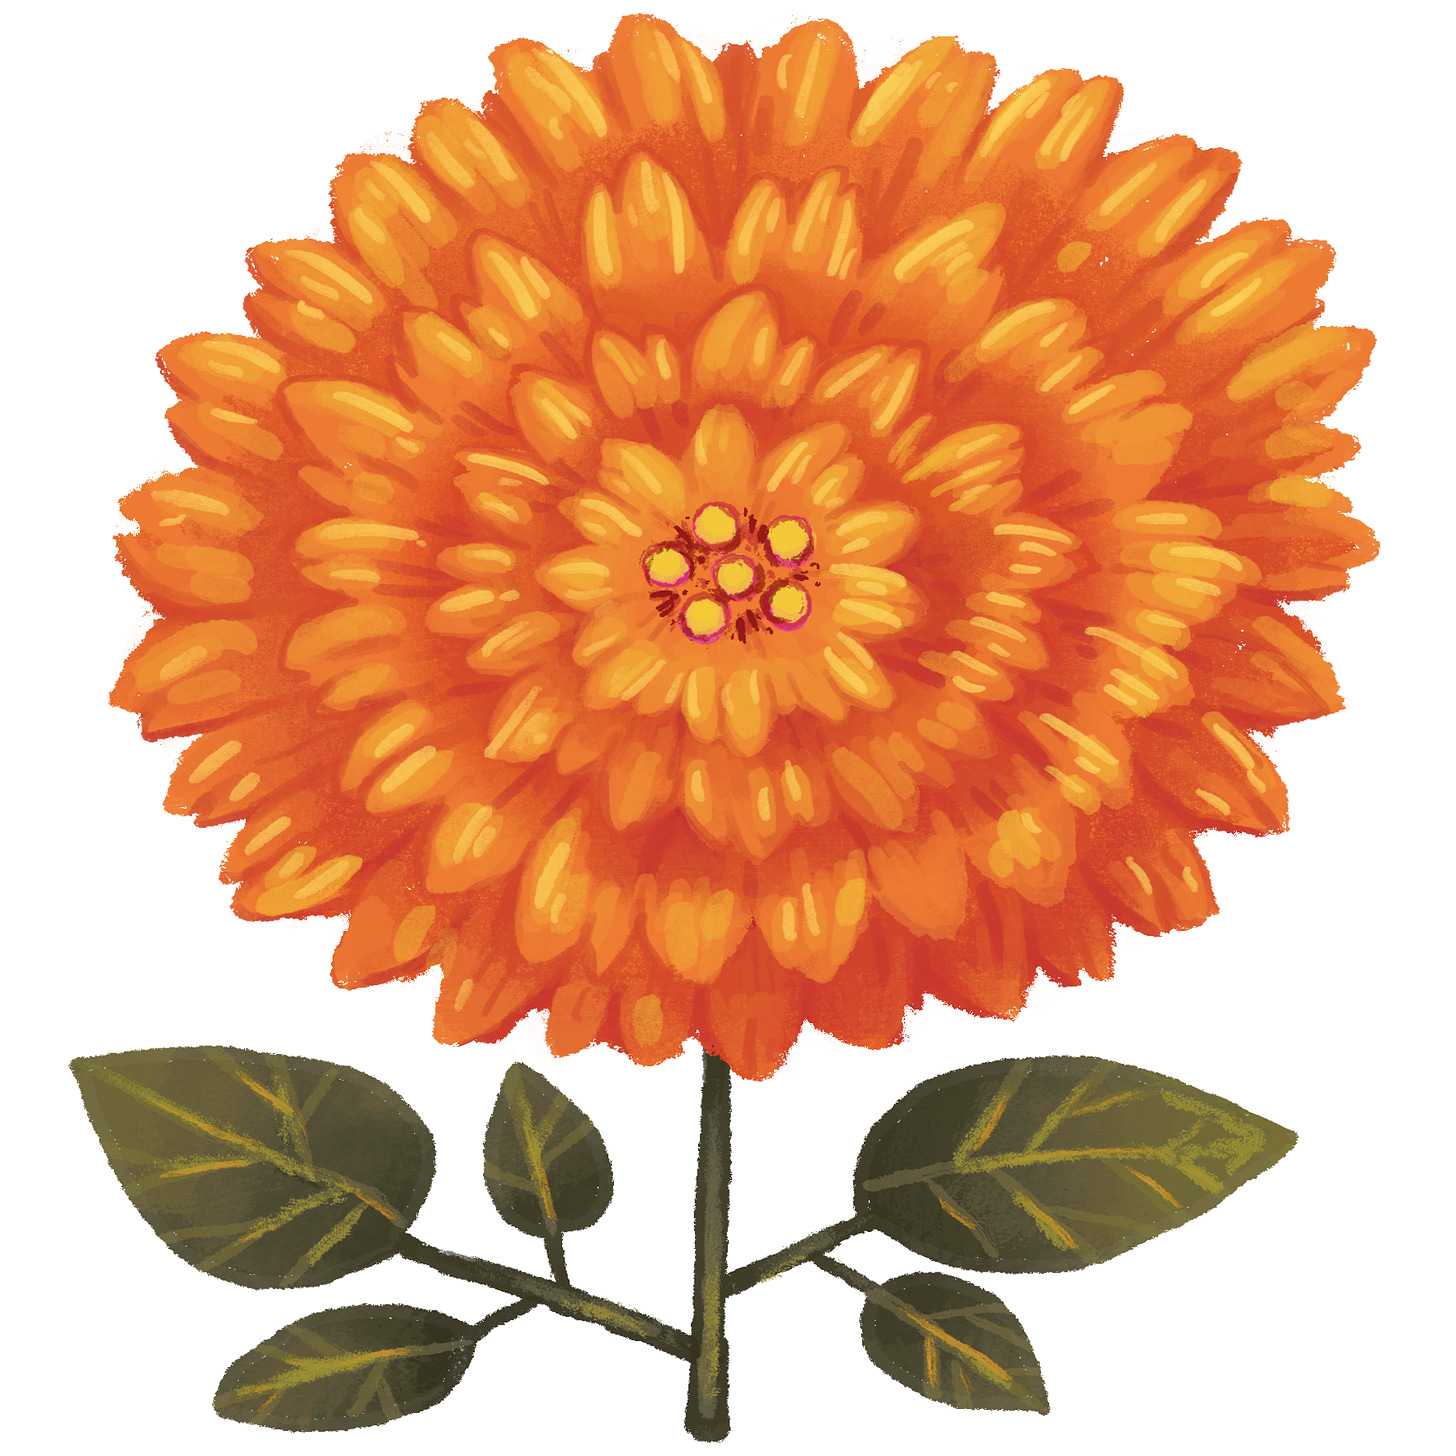 A handmade digital illustration of a stylized orange dahlia flower